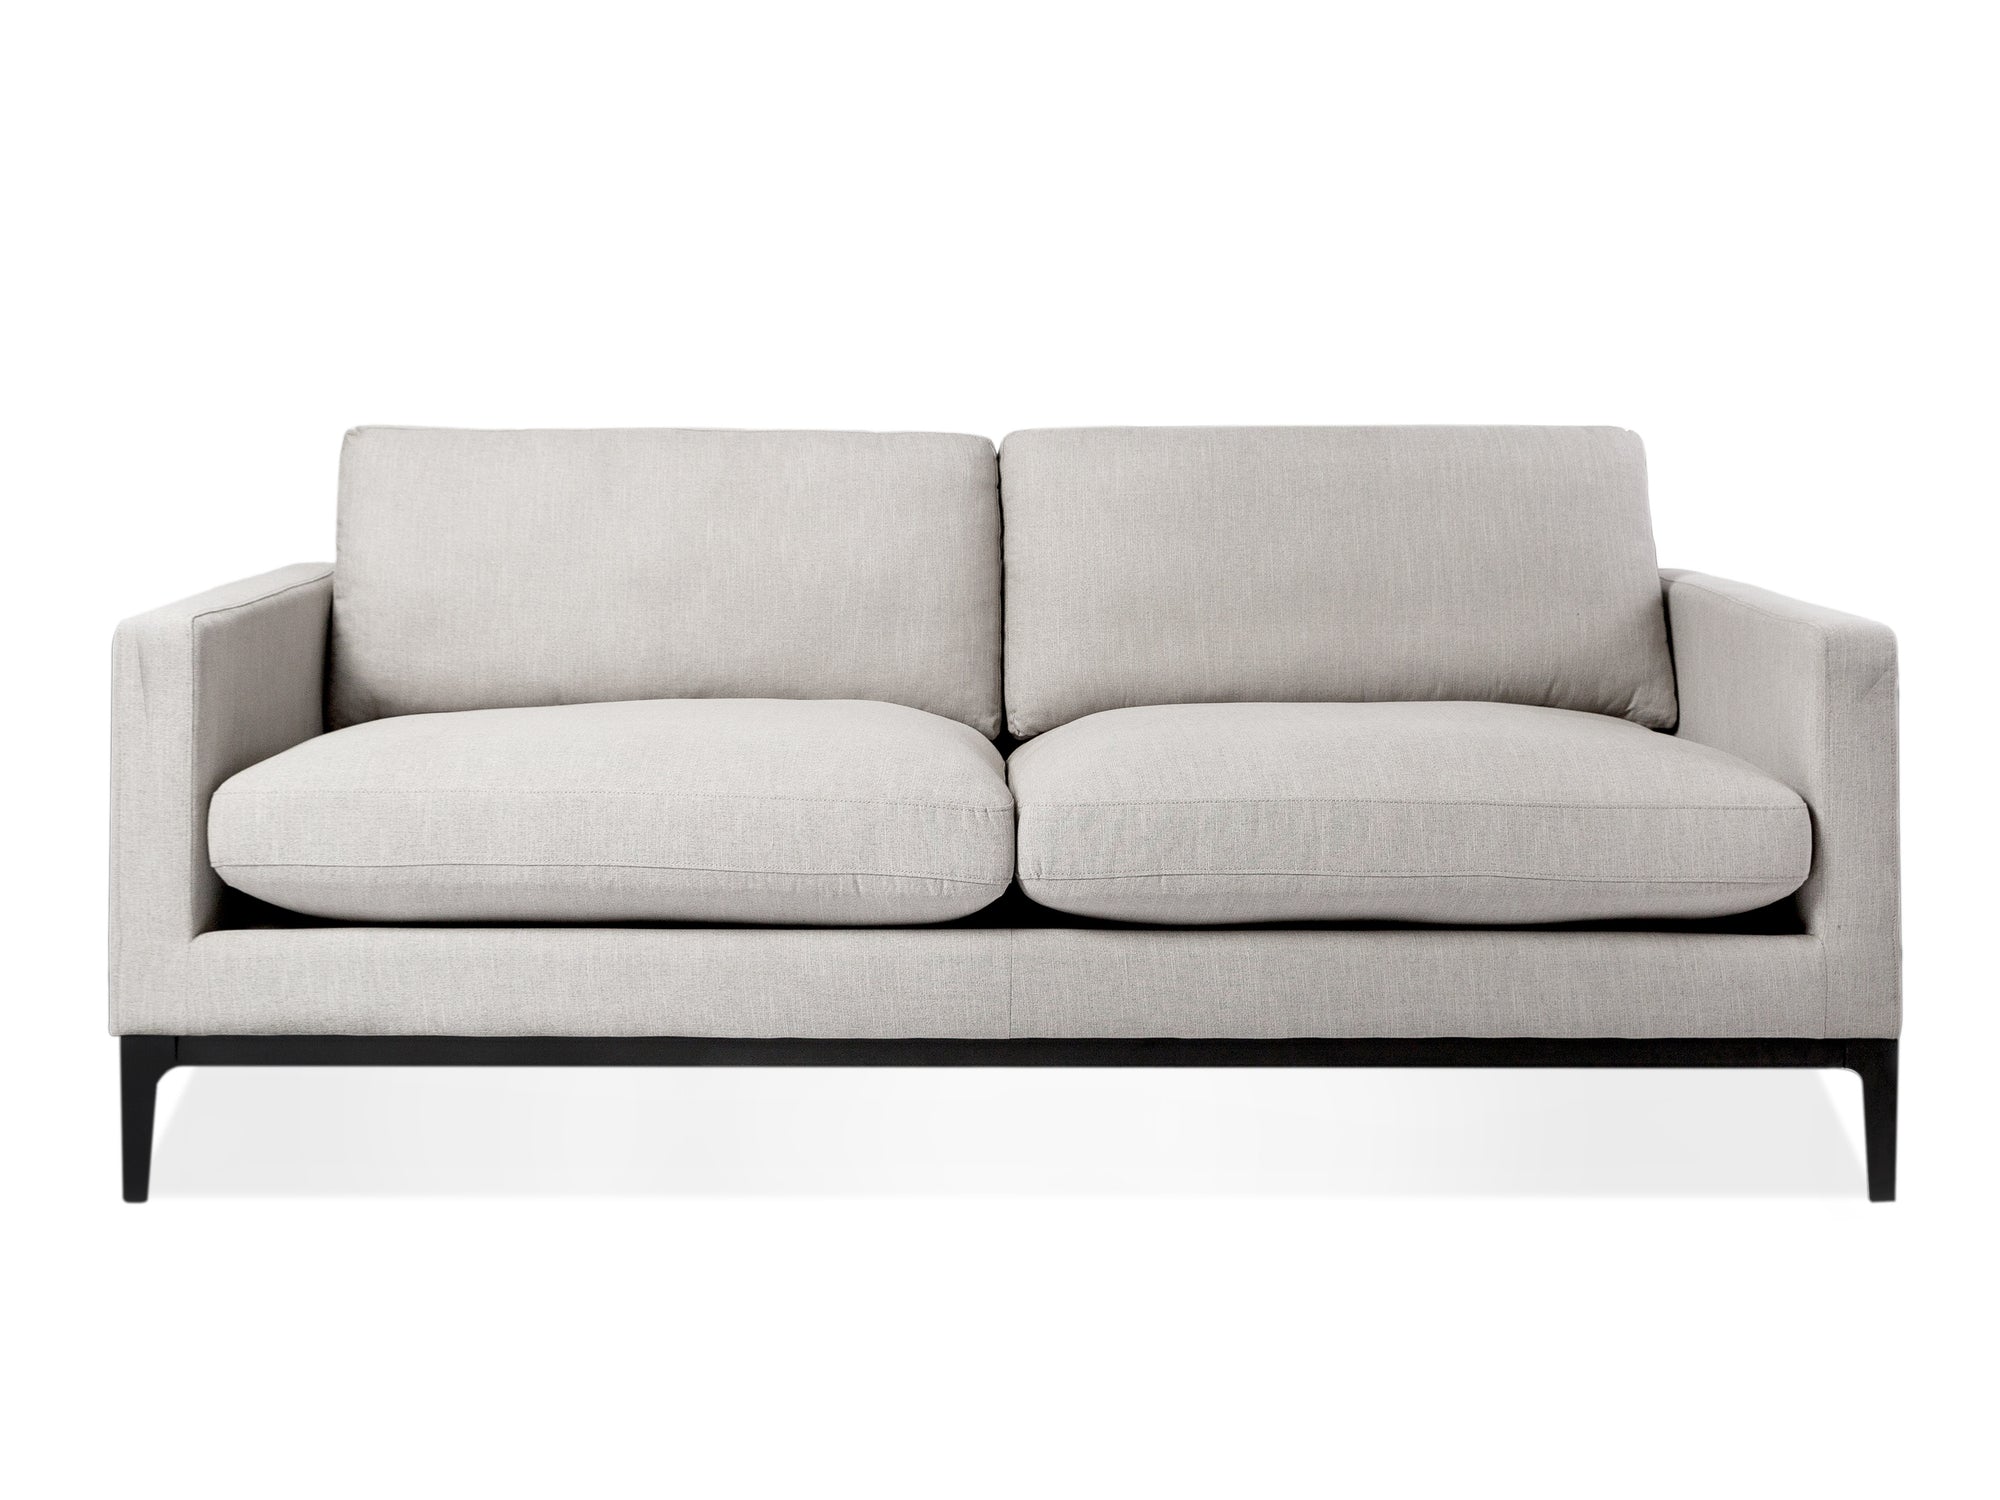 Long Plush Sofa - The Everset